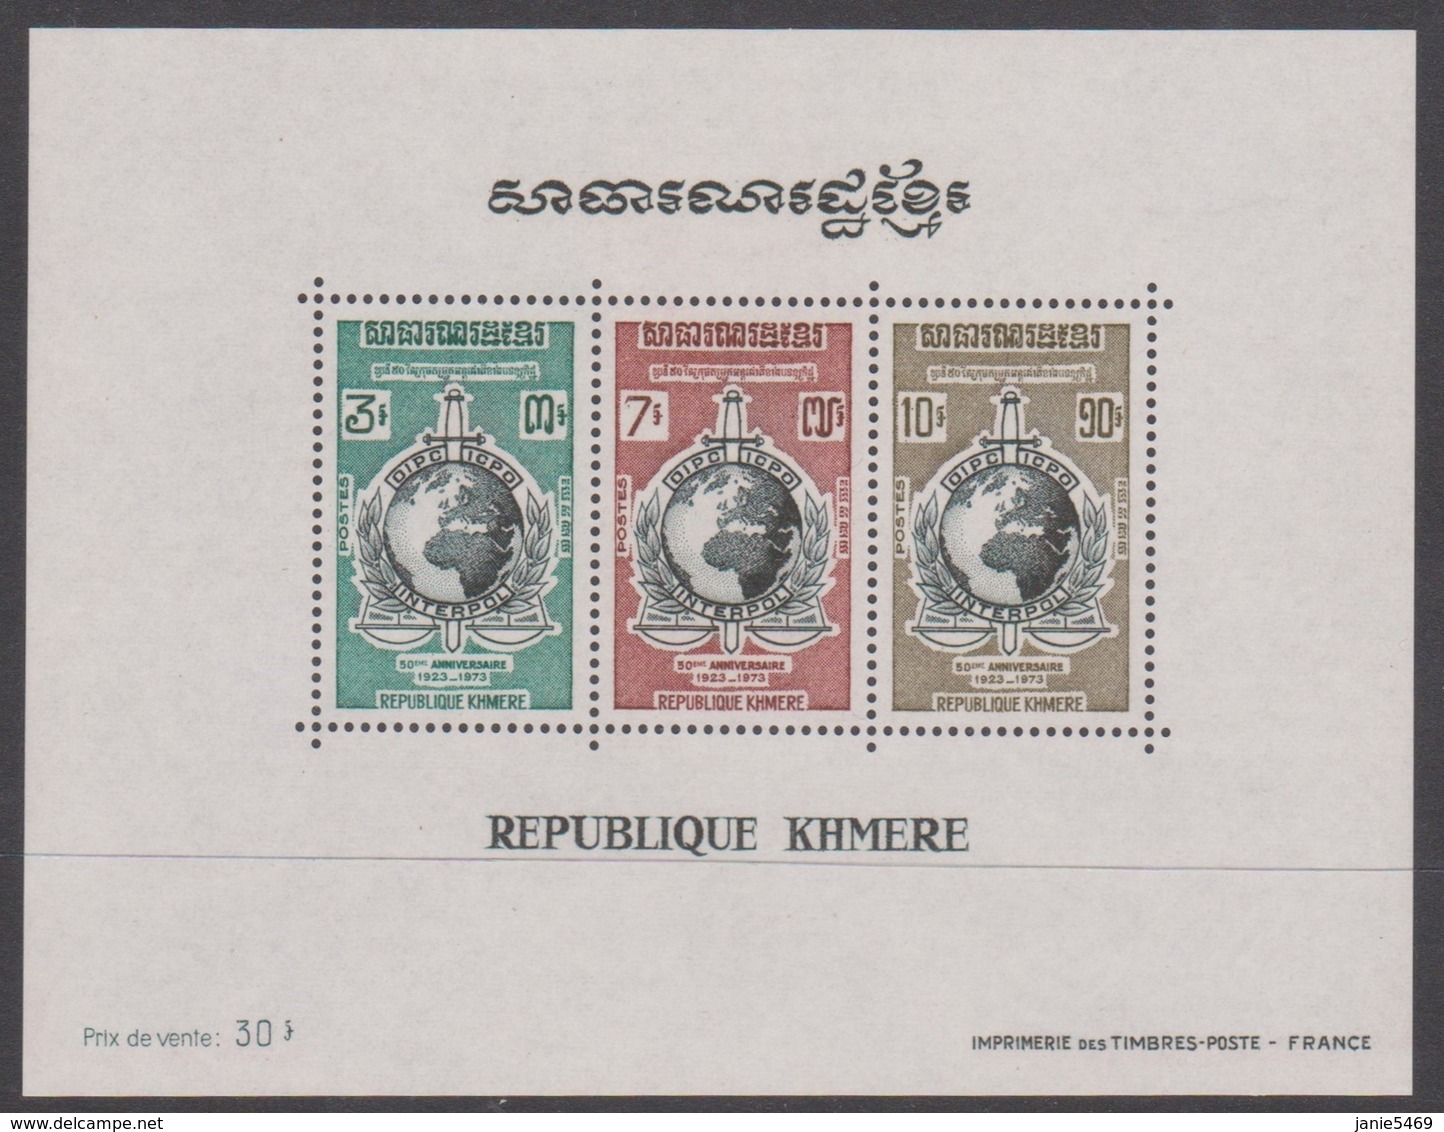 Cambodia Scott 317a 1973 50th Anniversary Of Interpol Souvenir Sheet, Mint Never Hinged - Cambodja